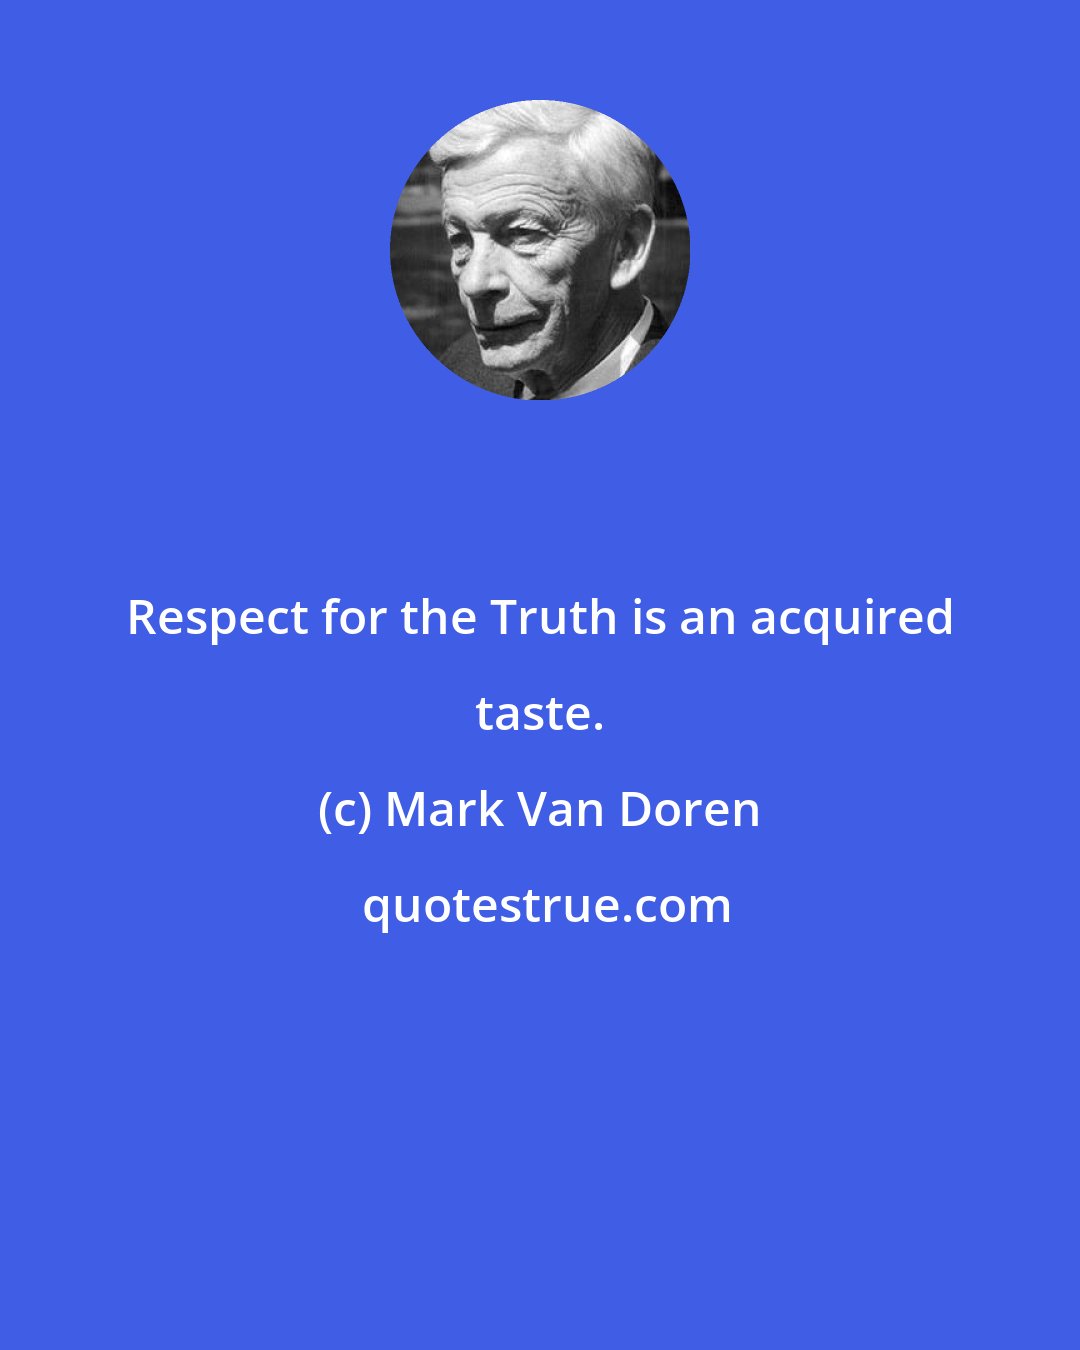 Mark Van Doren: Respect for the Truth is an acquired taste.